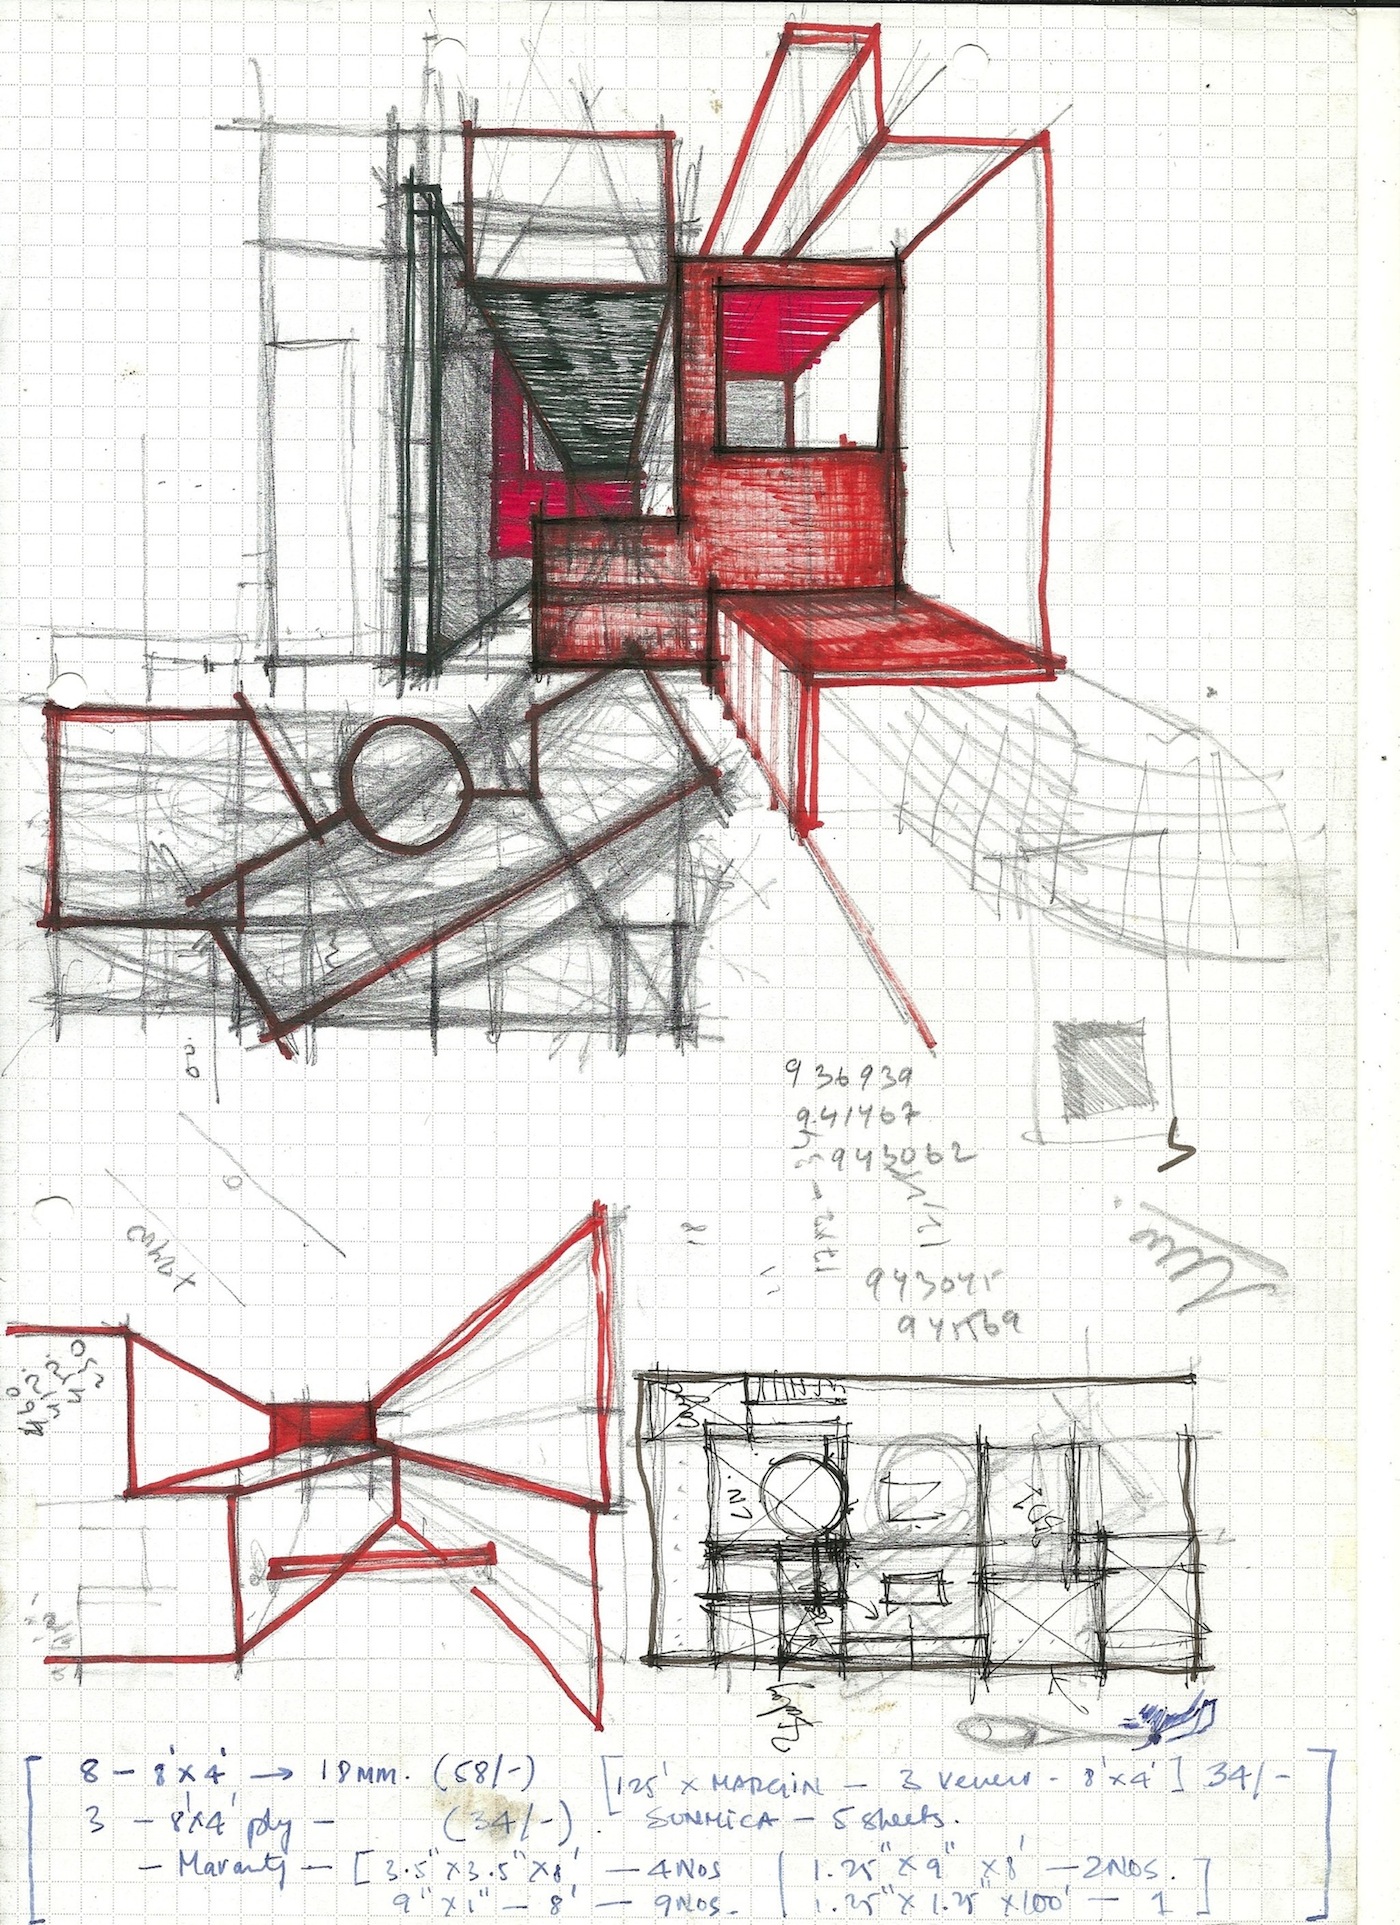 archiopteryx-design-sketch-1